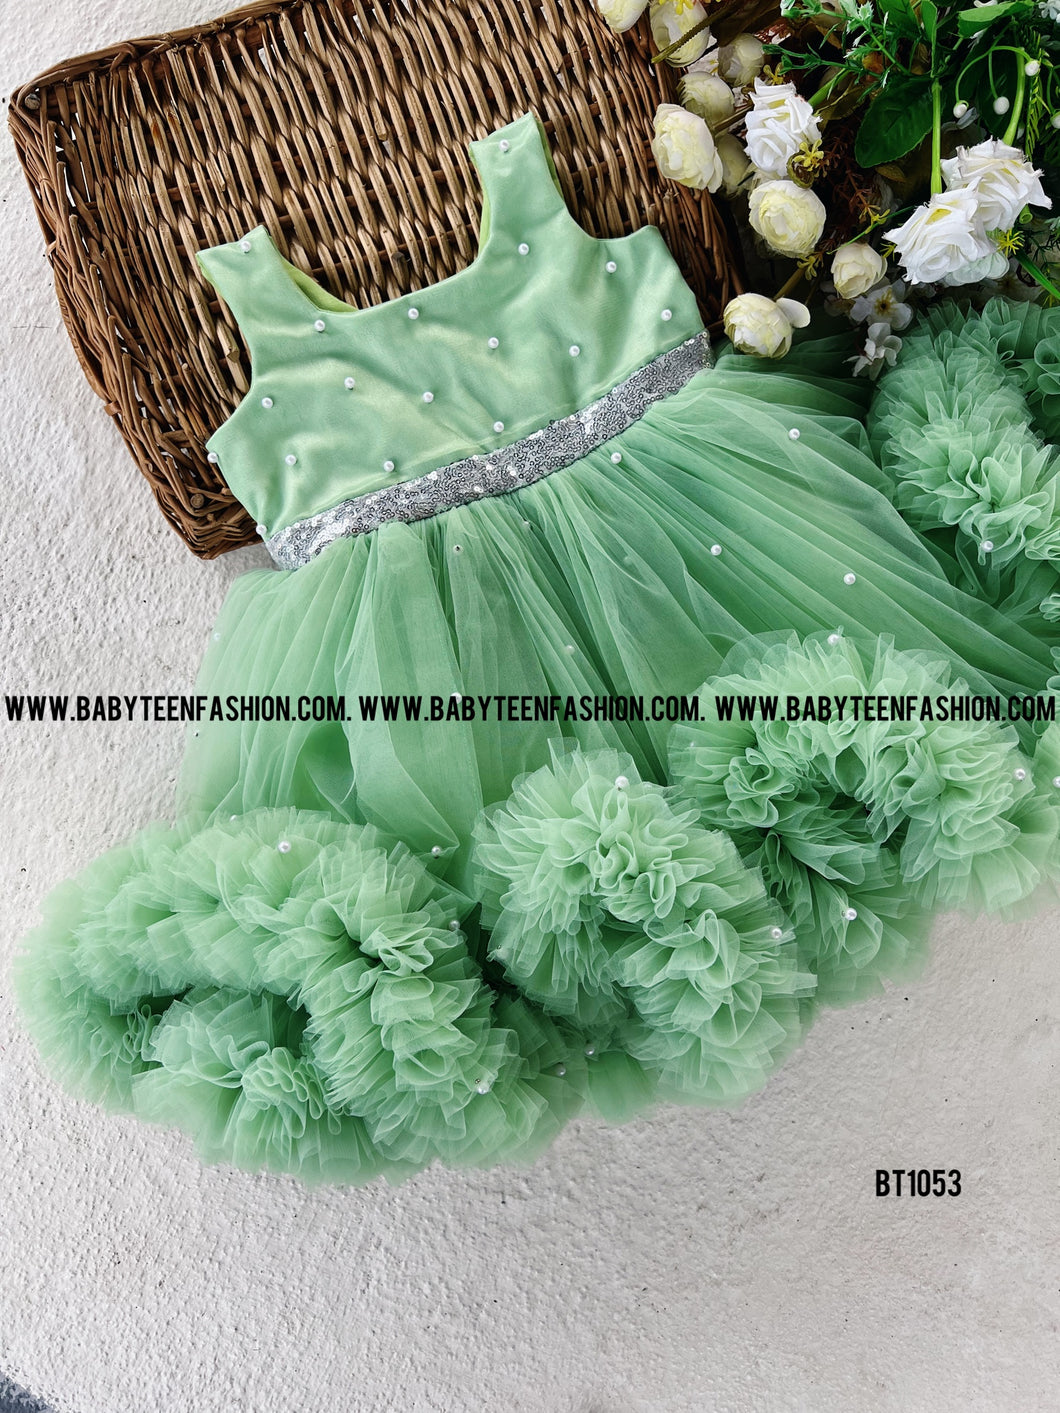 BT1053 Pista Green Color Ruffled Partywear Frock